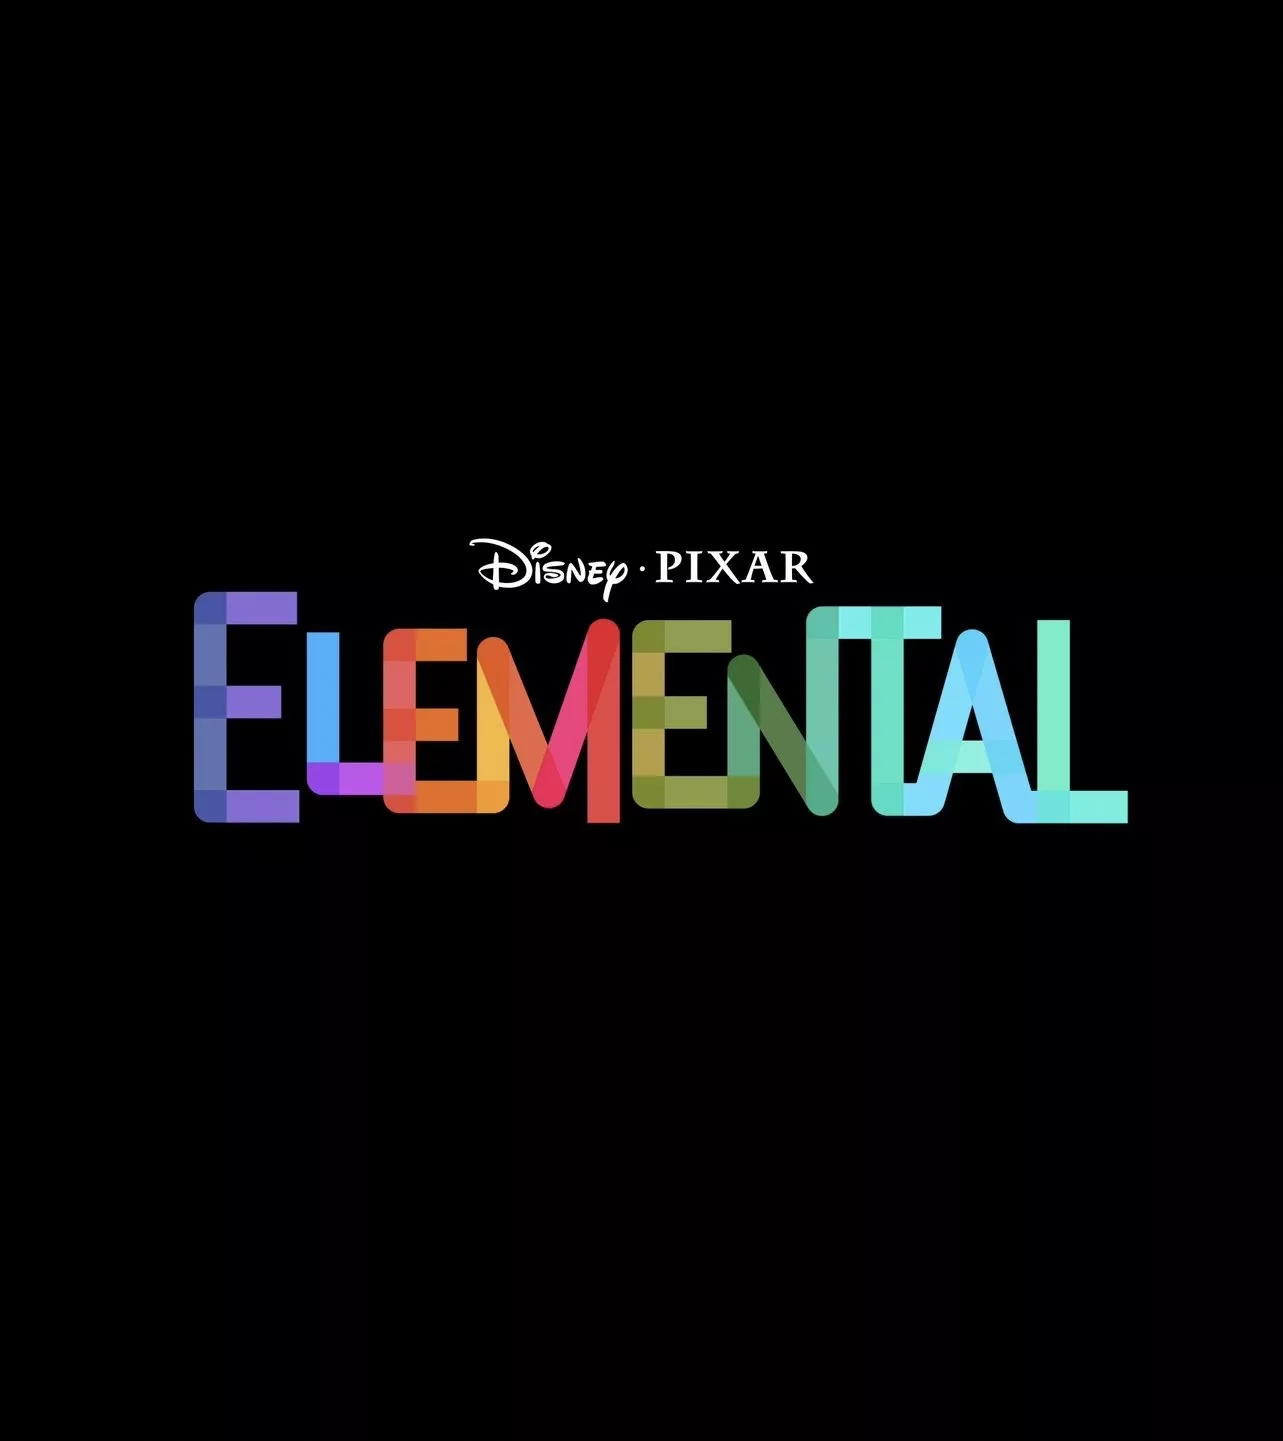 4b050680 f9fd 4e46 8ea6 72a15f515dc5 35702 00001456c6ca7263 file Divulgada logo para Elemental, próximo filme da Pixar.